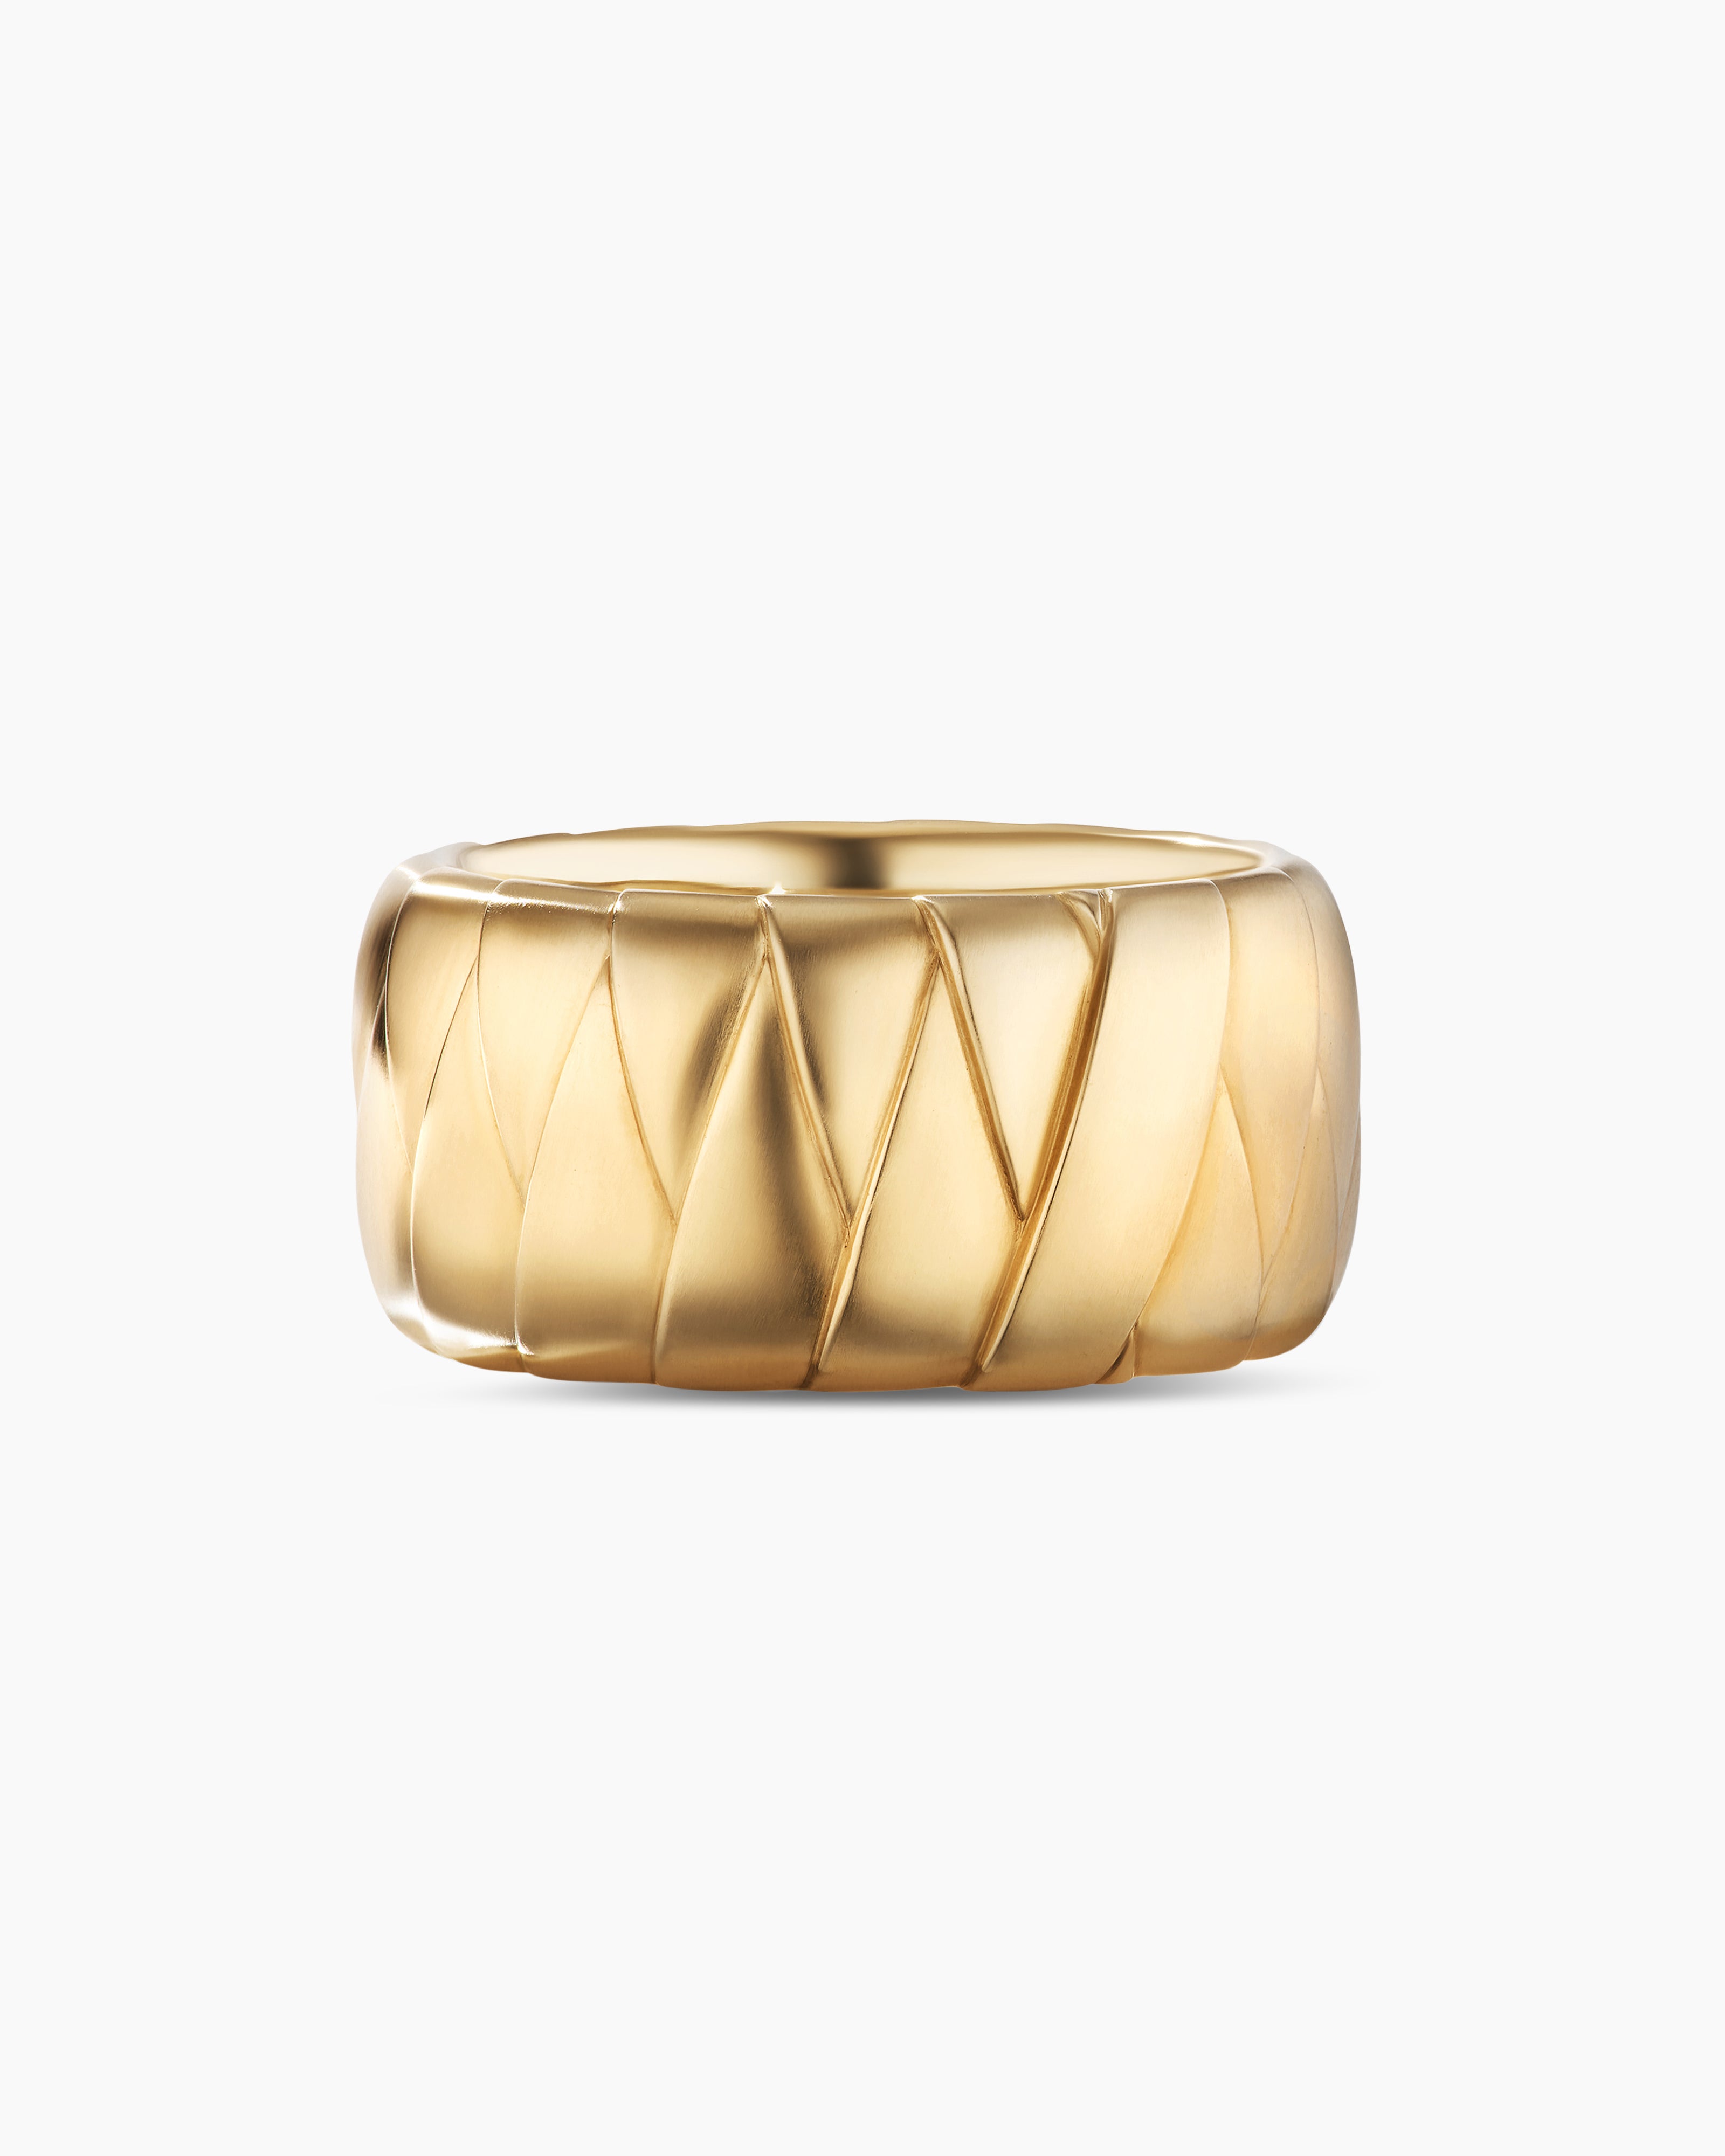 David Yurman Men's Cairo Wrap Band Ring in 18K Gold, 12mm, Men's, 11, Men's Jewelry Men's Rings